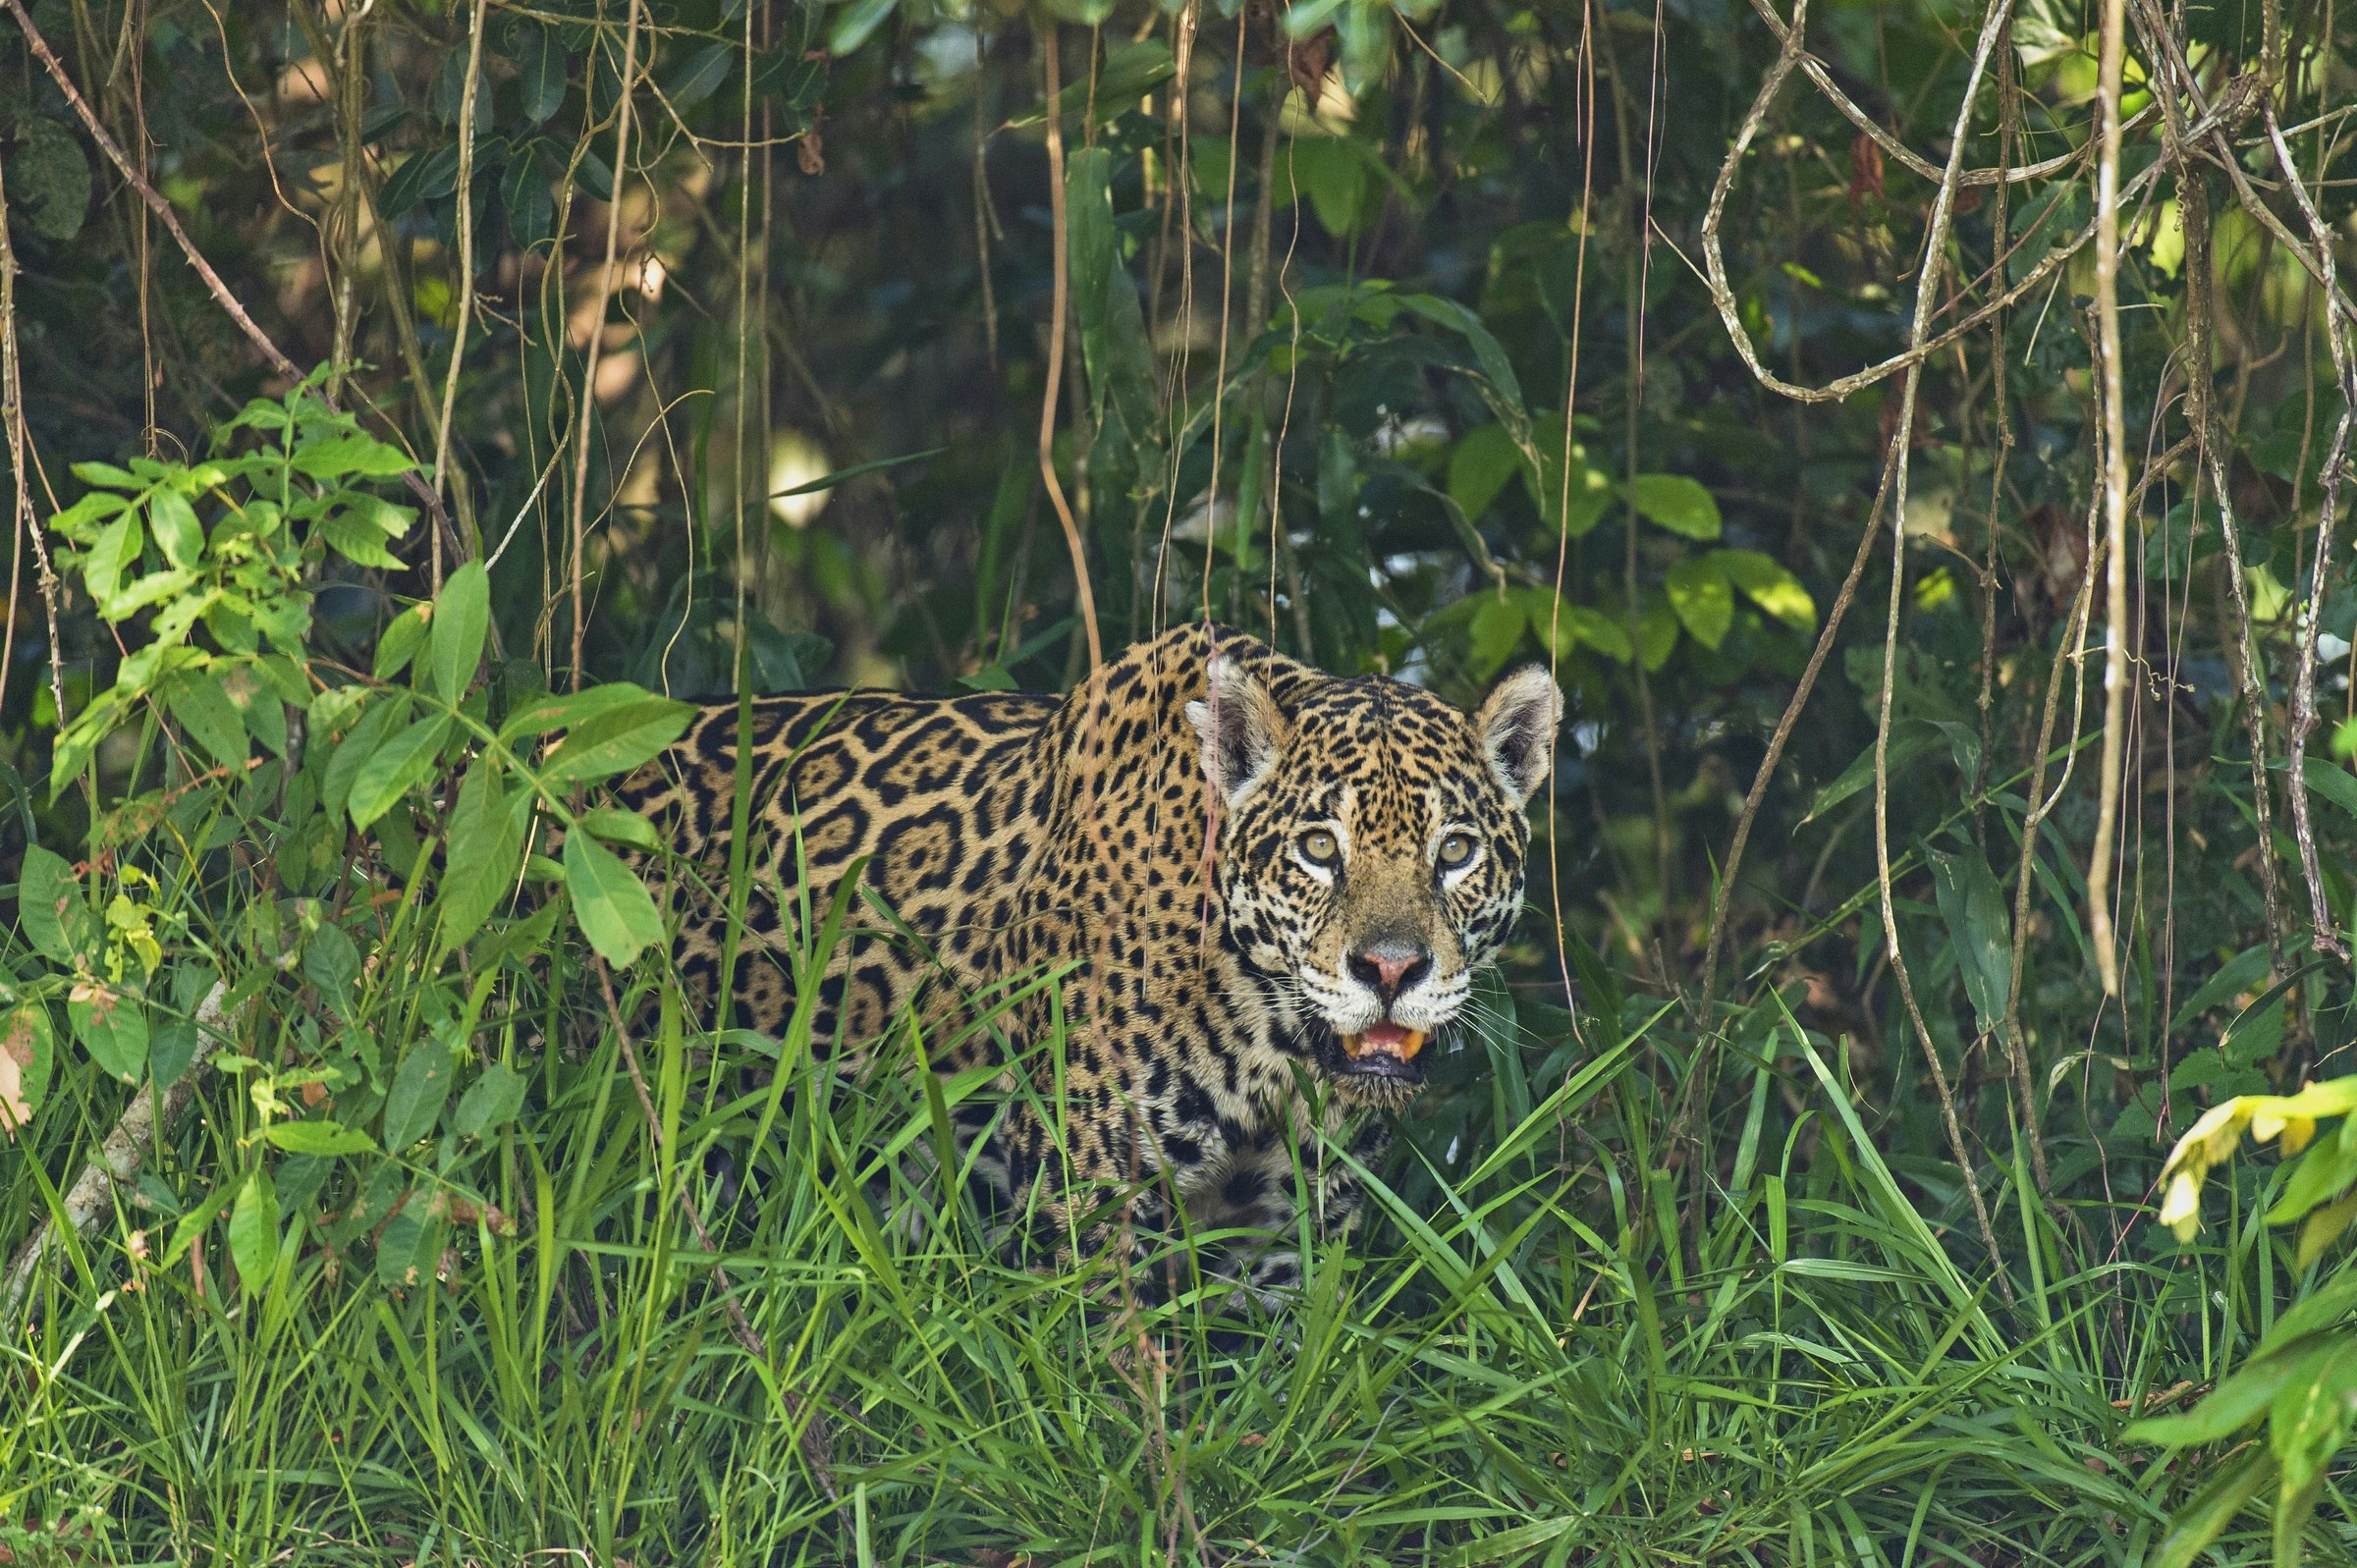 A jaguar crouches low in lush grassland.